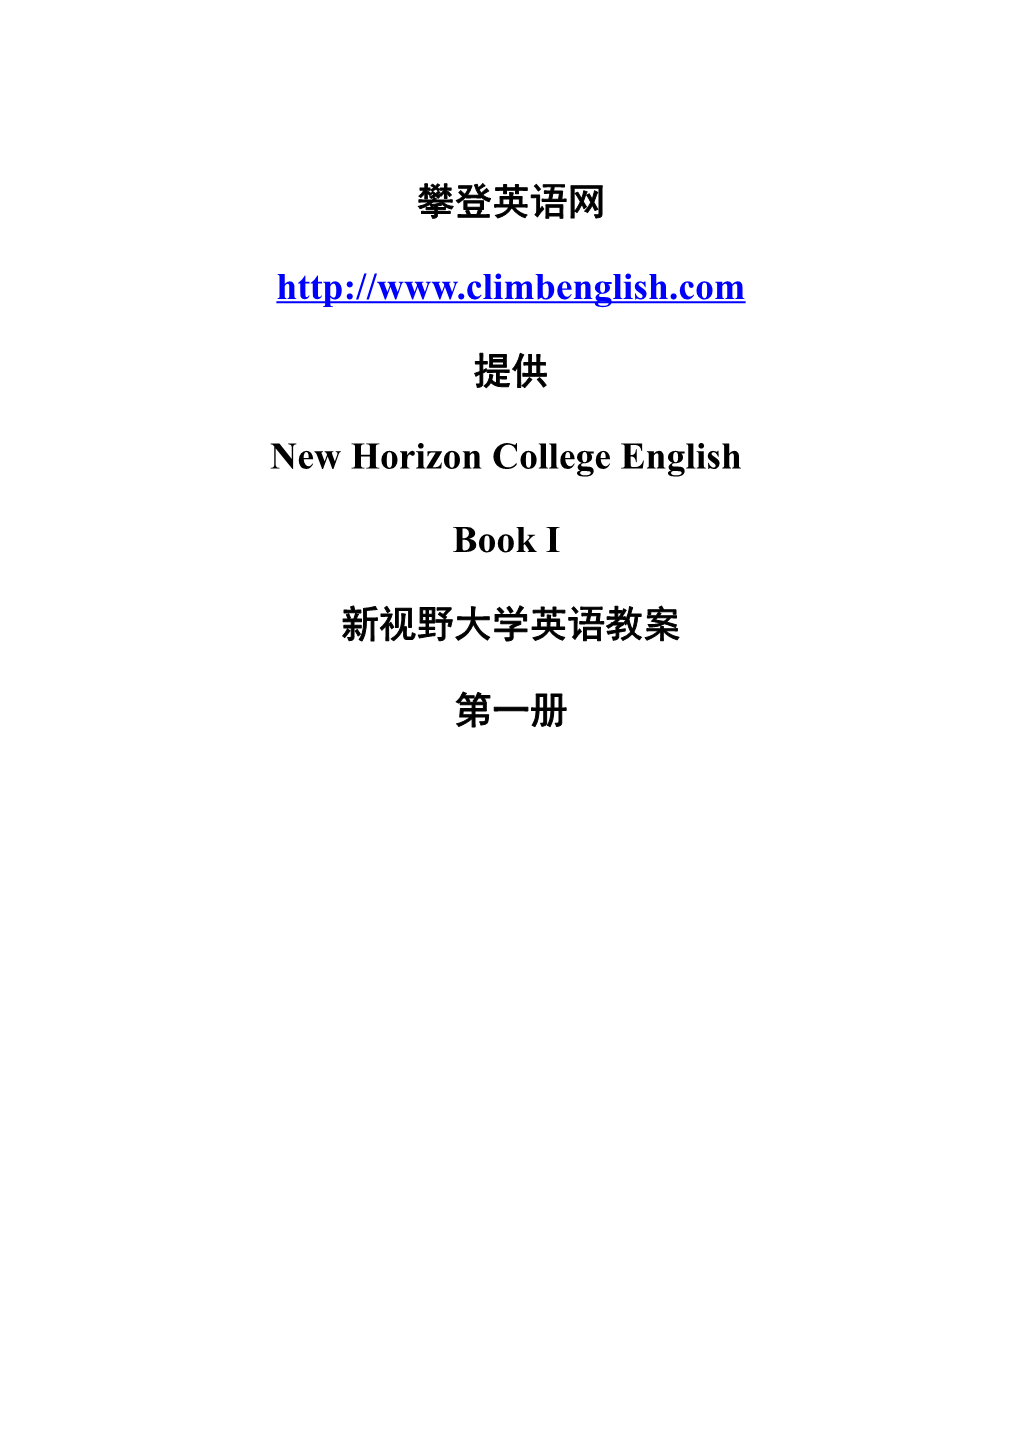 New Horizoncollege English